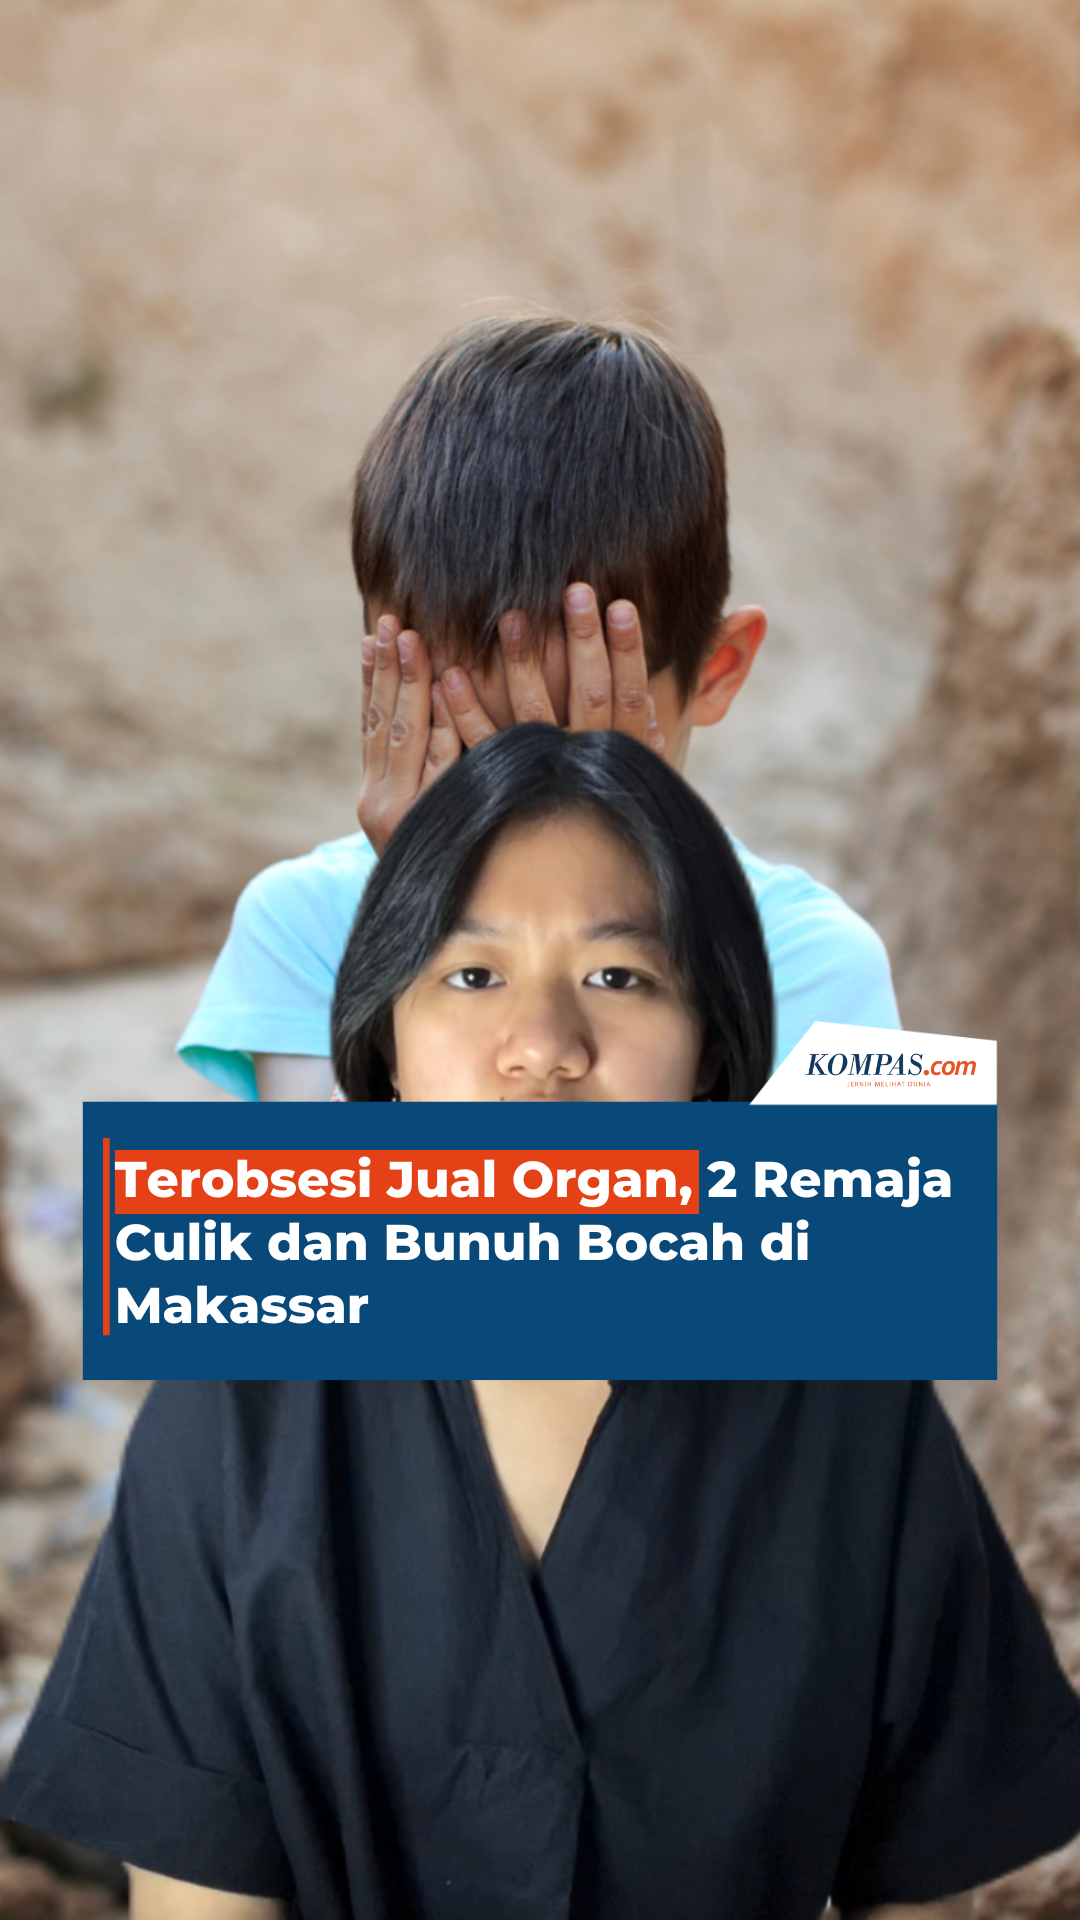 Terobsesi Jual Organ, 2 Remaja Culik dan Bunuh Bocah di Makassar